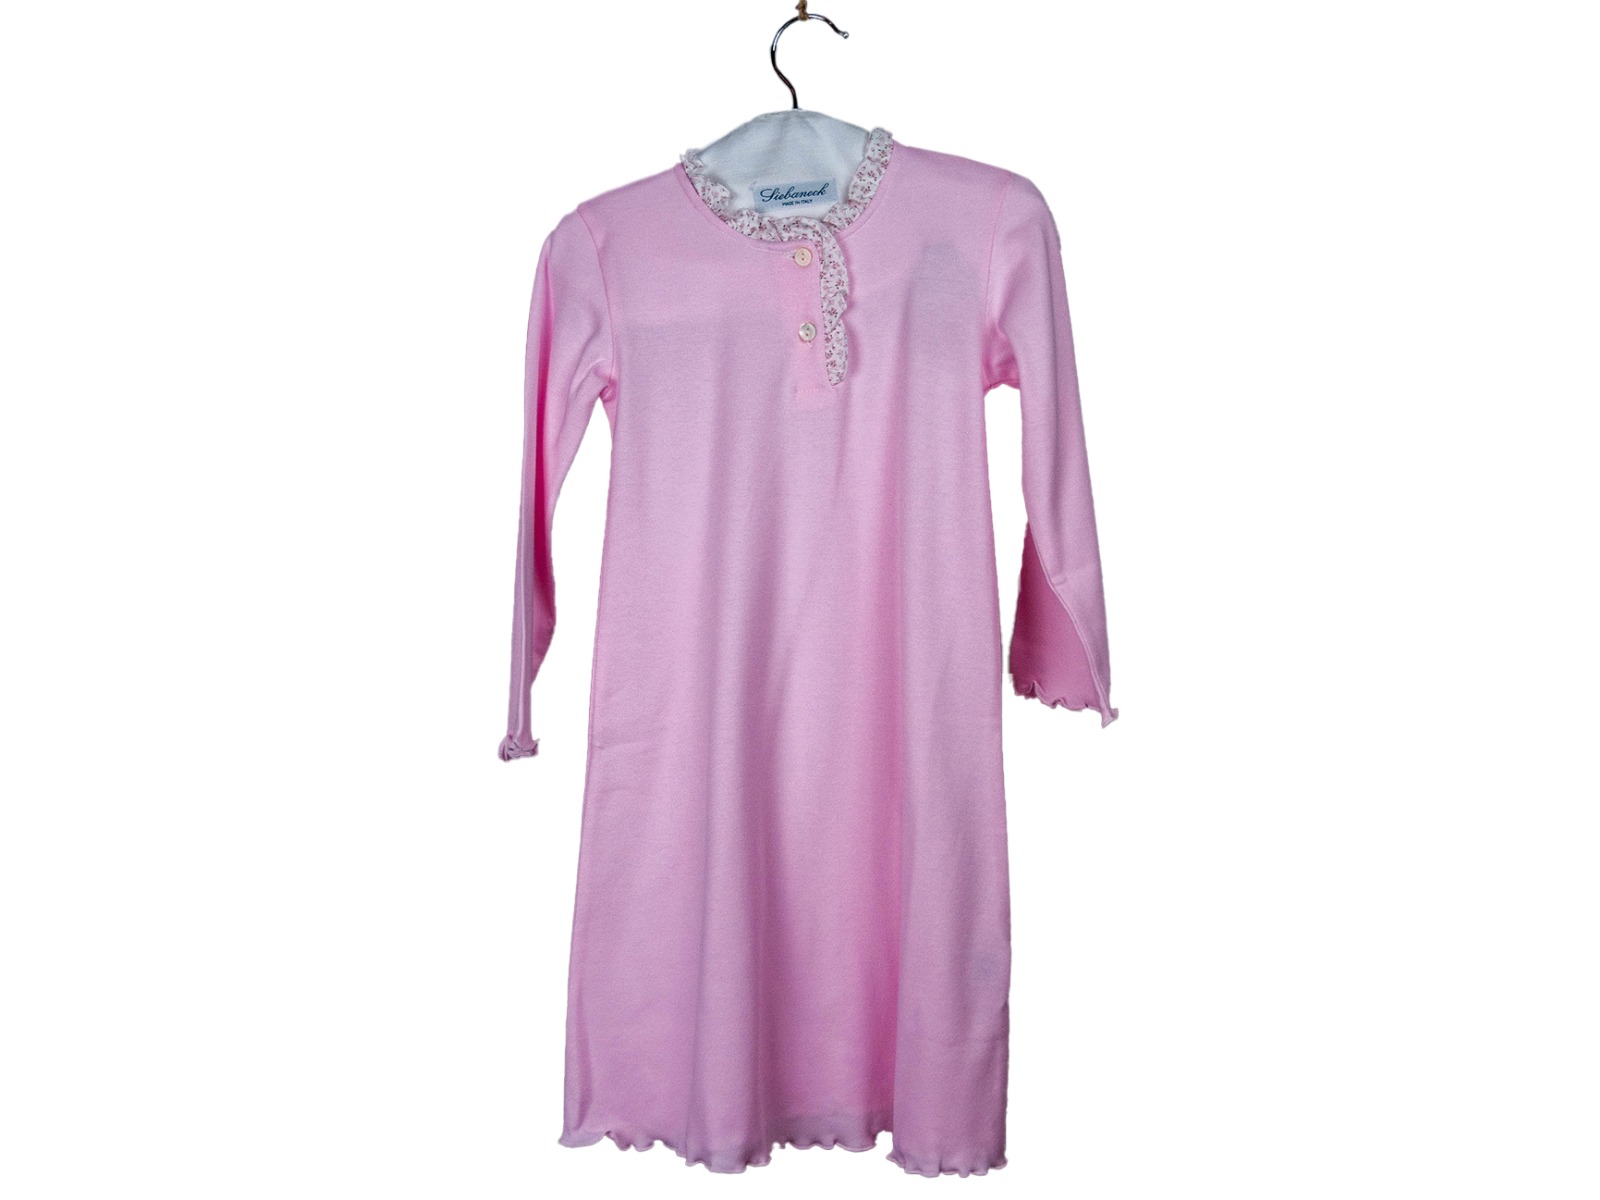 Siebaneck, i pigiami artigianali italiani: - bambina - mod.7 Bis rosa accesso